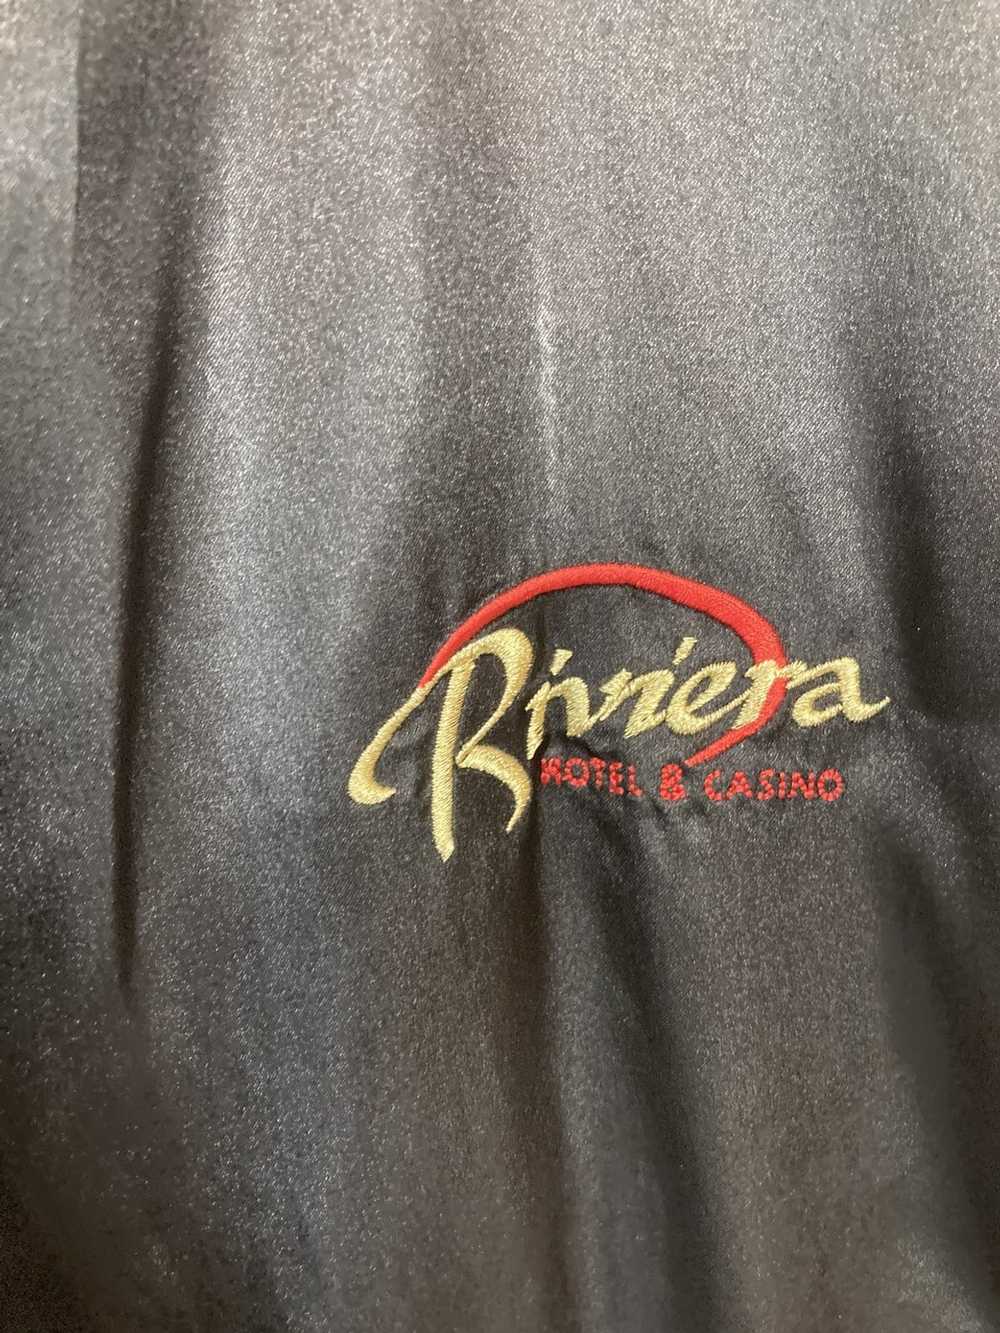 Vintage Riviera Hotel & Casino Satin Zip Up - image 3